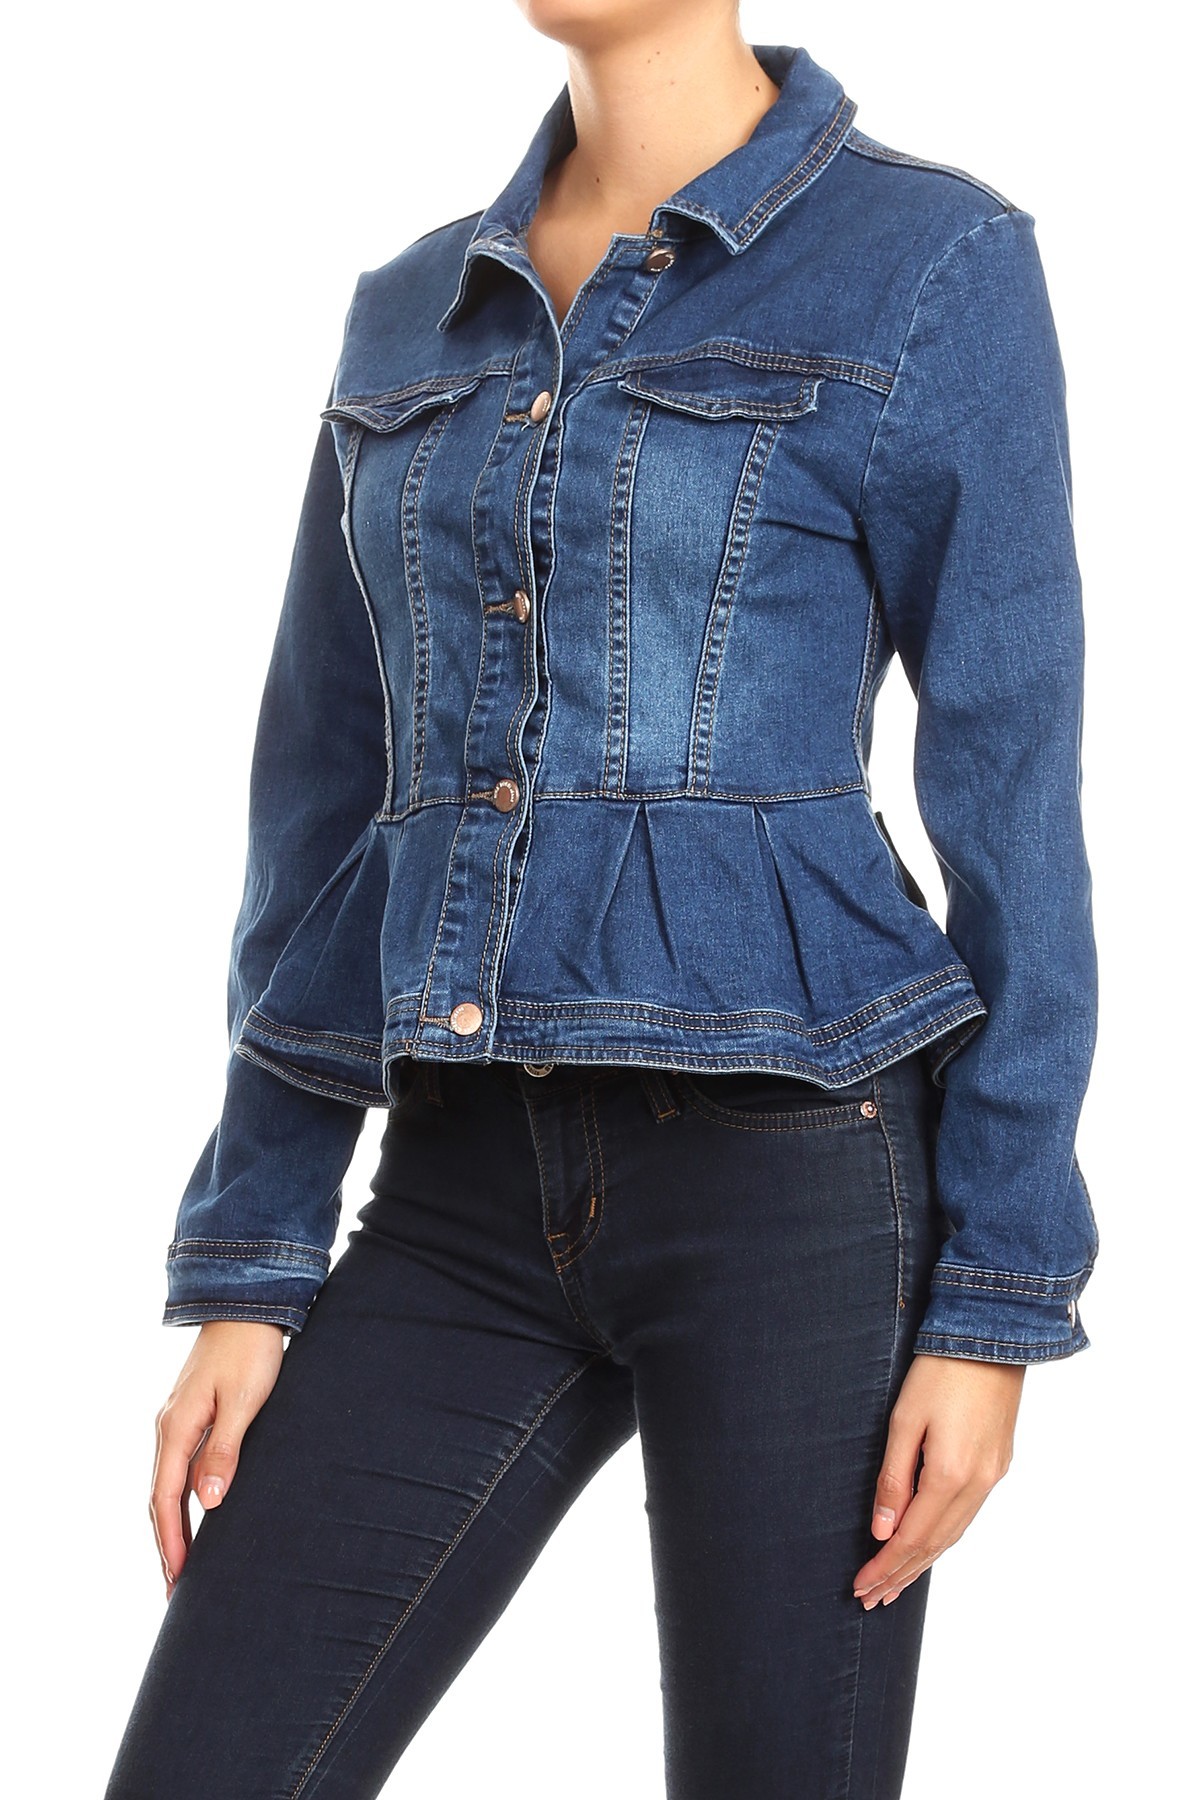 Fashion2Love Women's Plus / Juniors Size Premium Denim Premium Bodice Long Sleeve Jacket - image 2 of 8